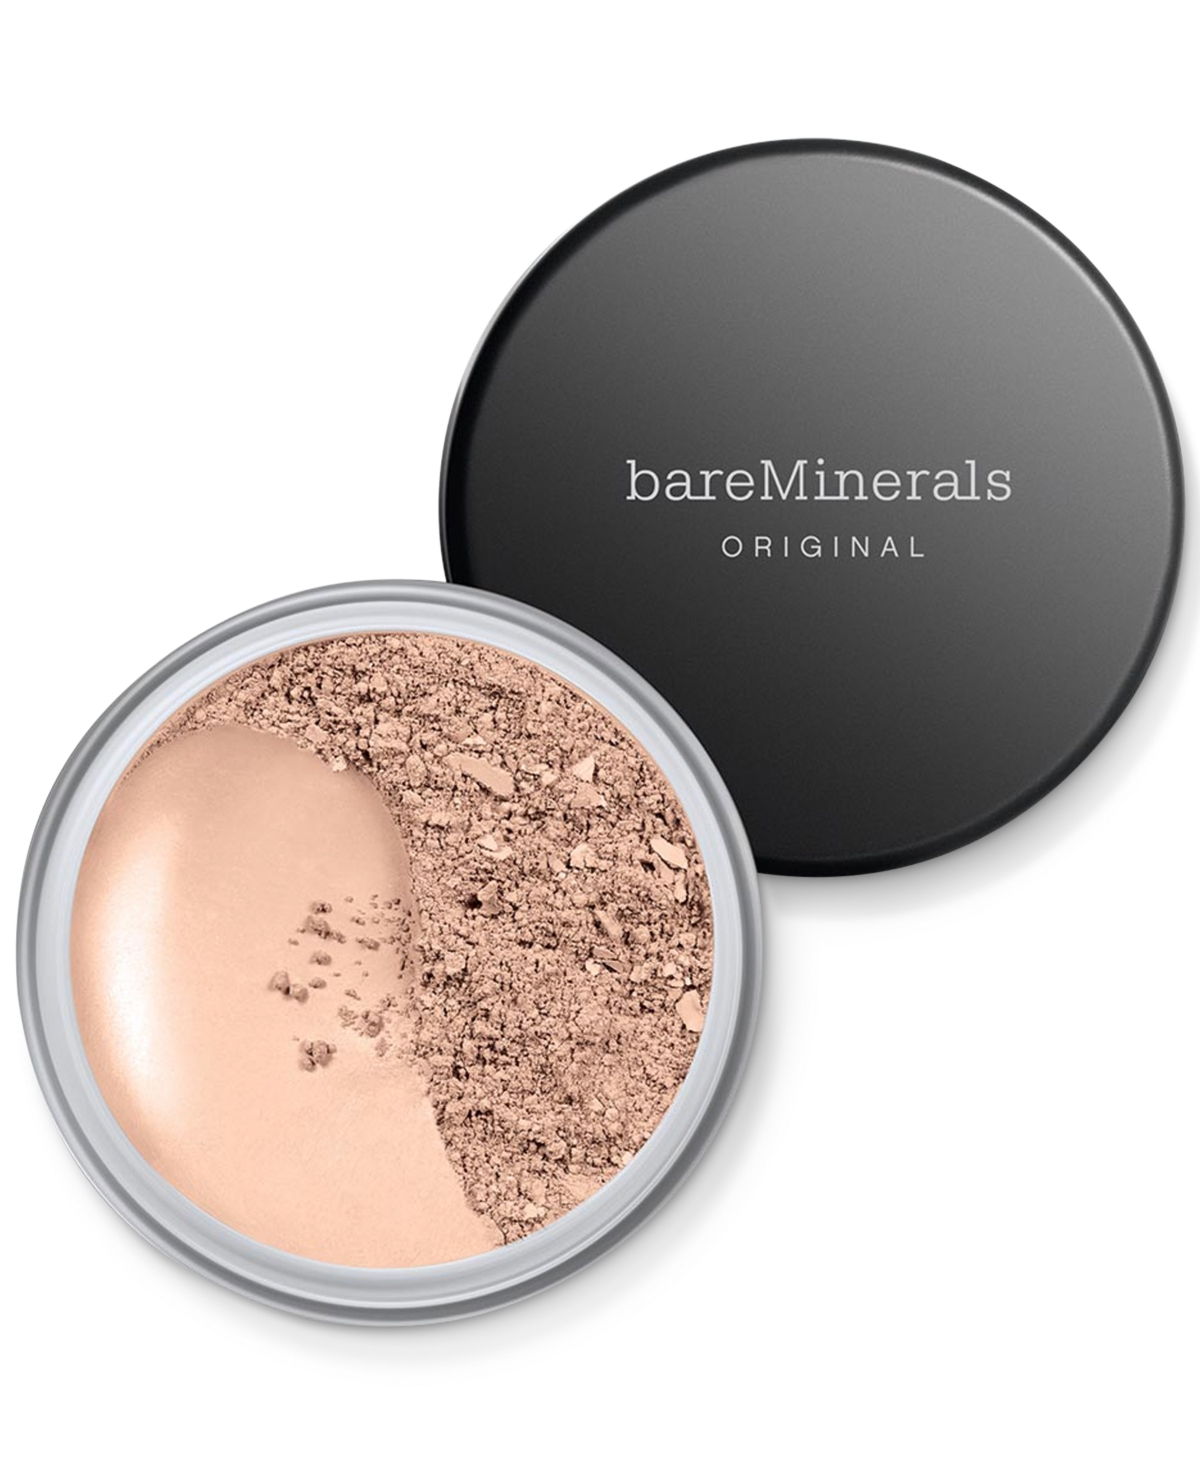 Bareminerals Original Loose Powder Foundation Spf 15 In Medium  - For Medium Skin With Cool Unde